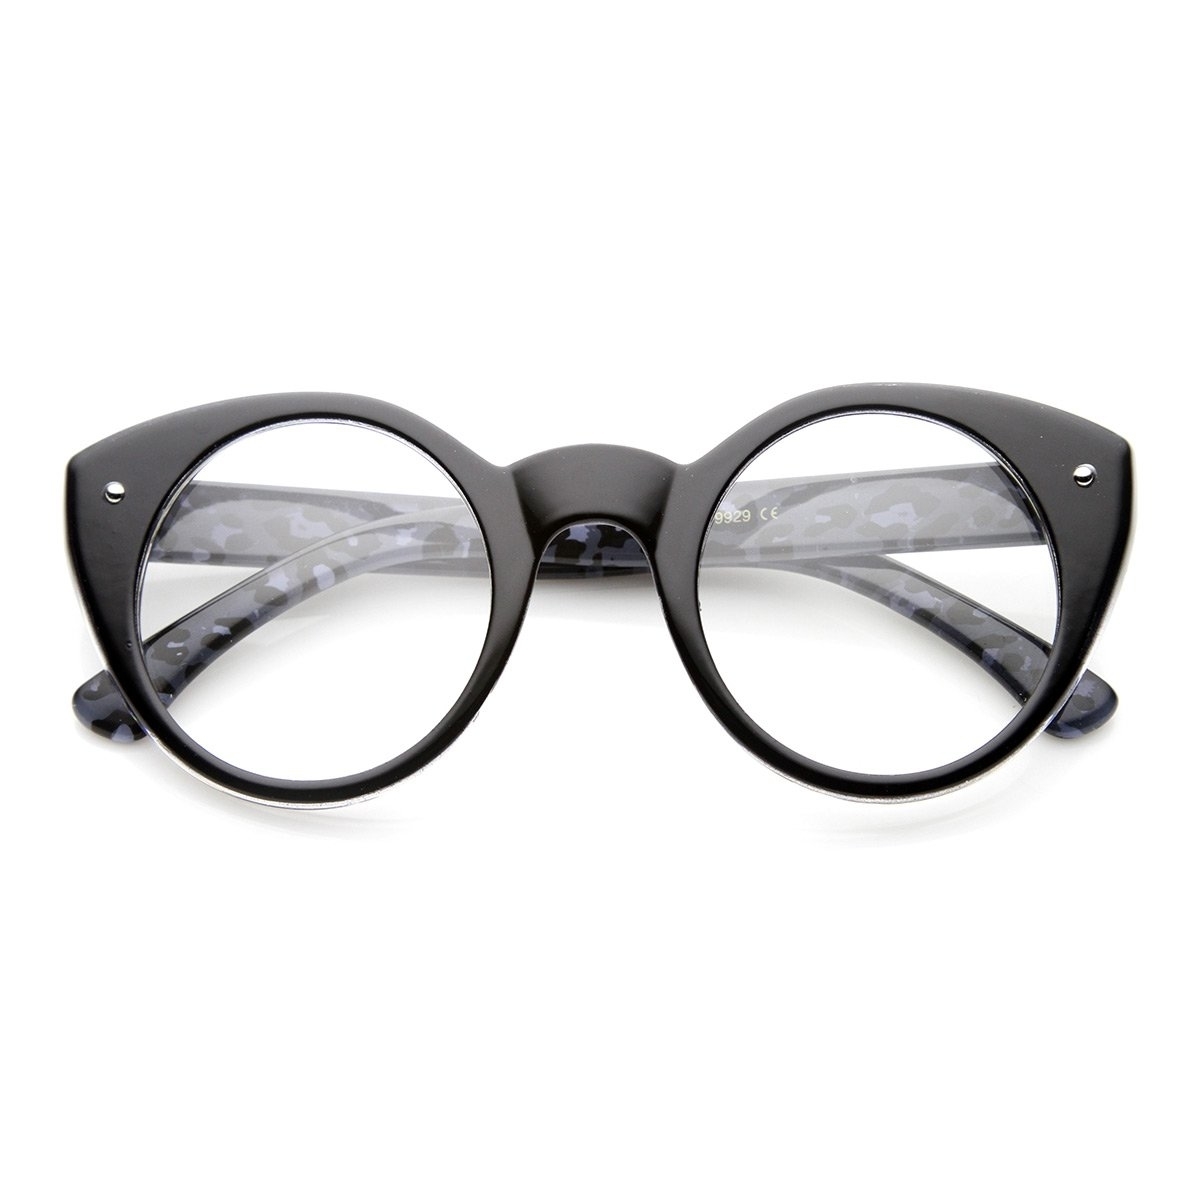 Round Cat Eye Clear Fashion Frame Glasses - Black-Brown-Cheetah